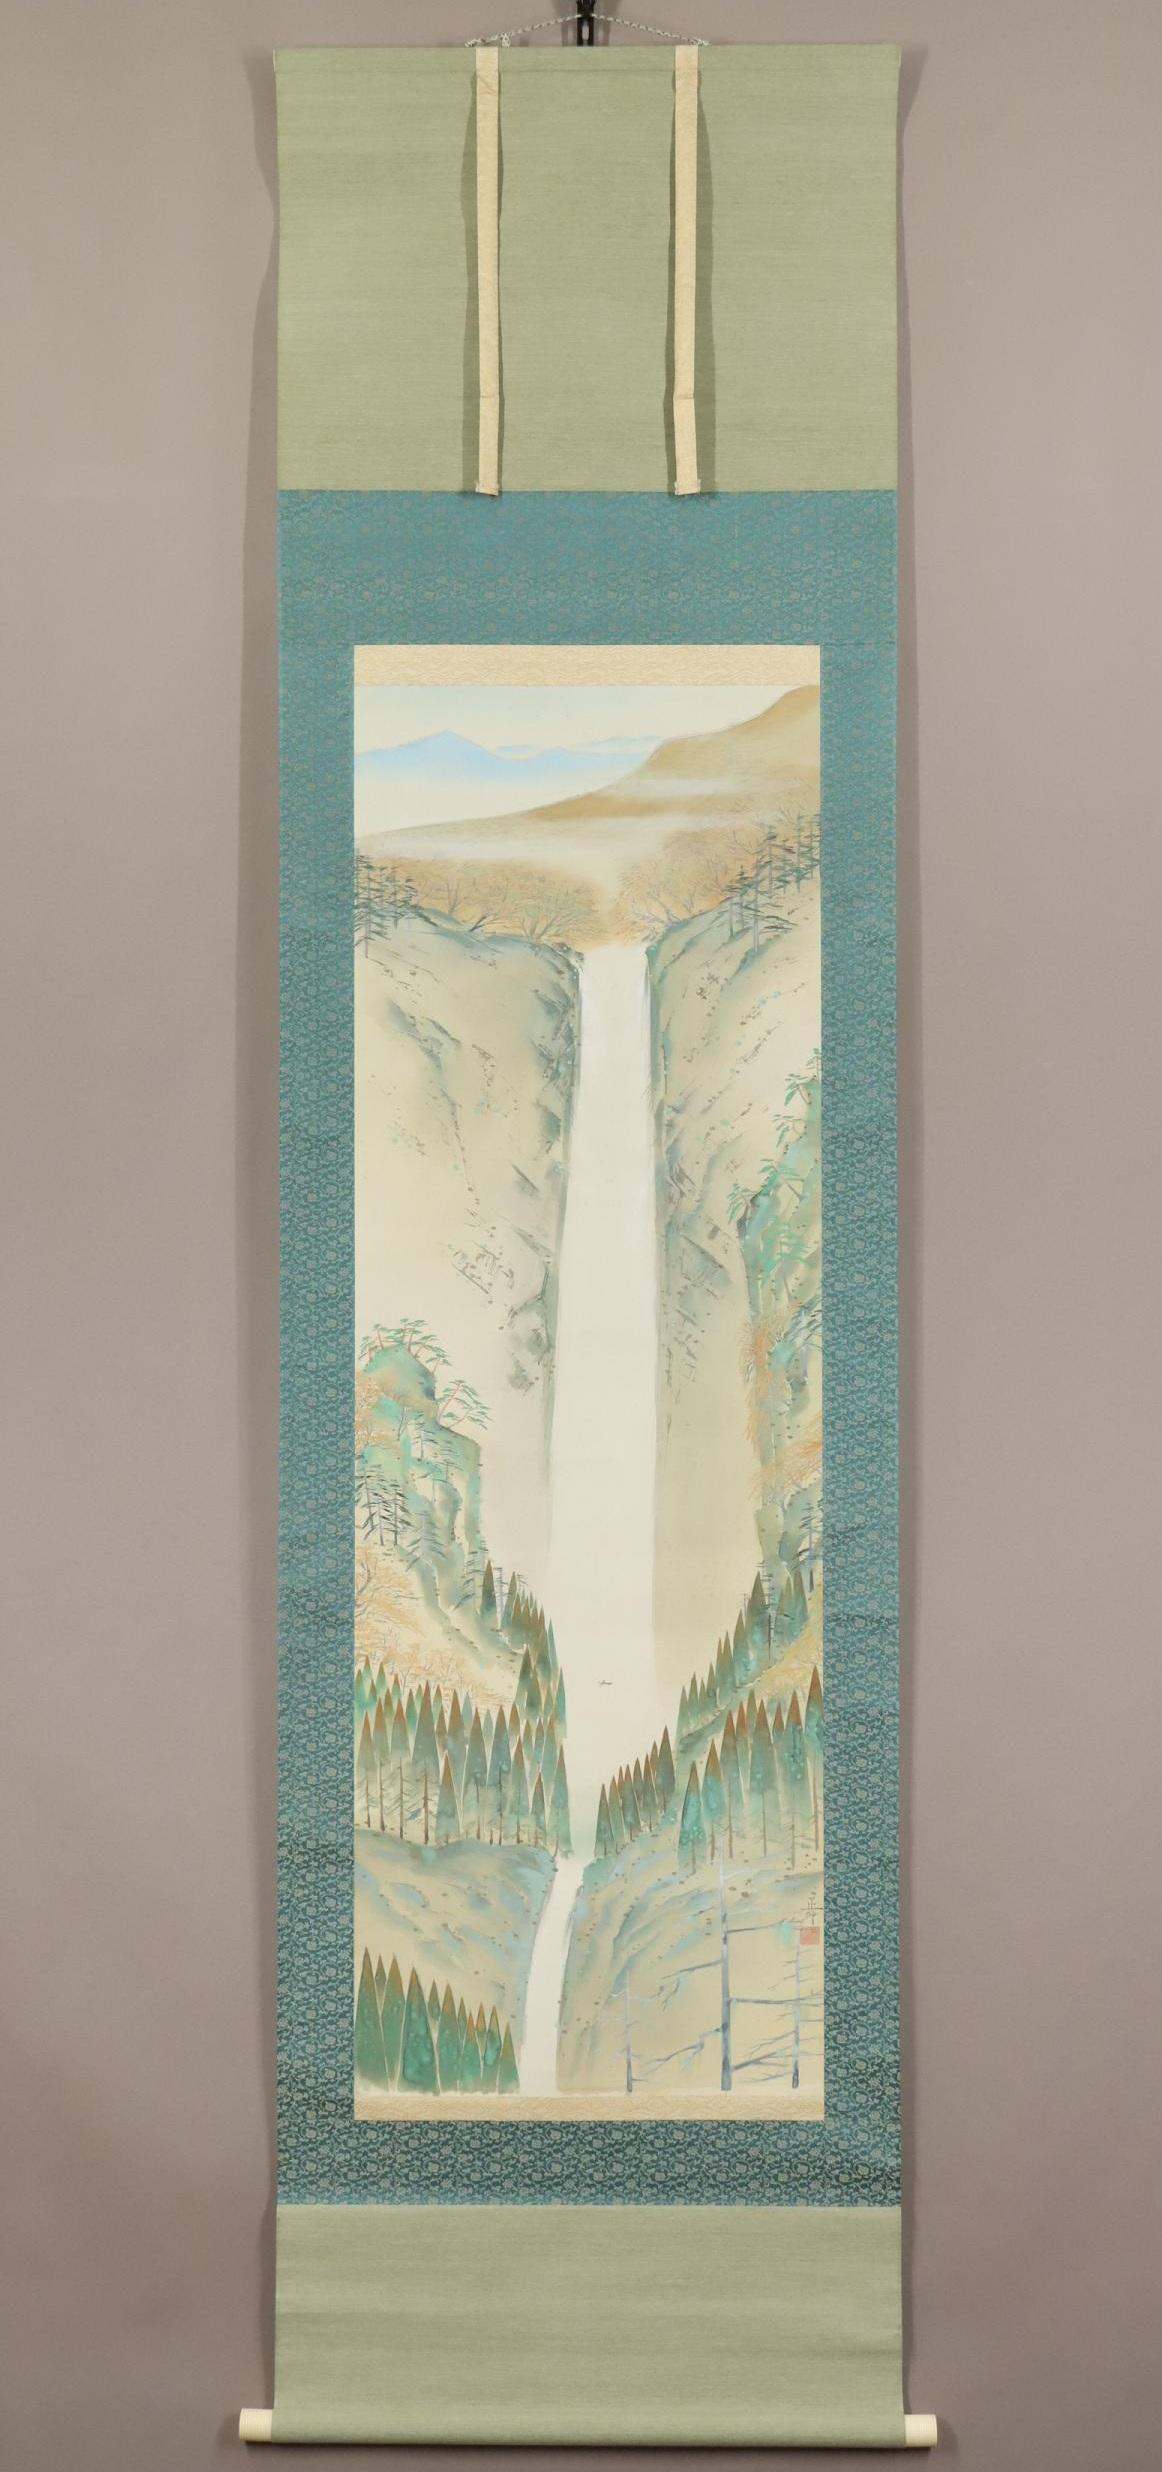 [Authentic Artwork] ◆ Tadashi Mamiya ◆ Waterfall ◆ Japanese Painting ◆ Saitama Prefecture ◆ Hand-Painted ◆ Silk ◆ Hanging Scroll

Discover the serene beauty of Tadashi Mamiya's 